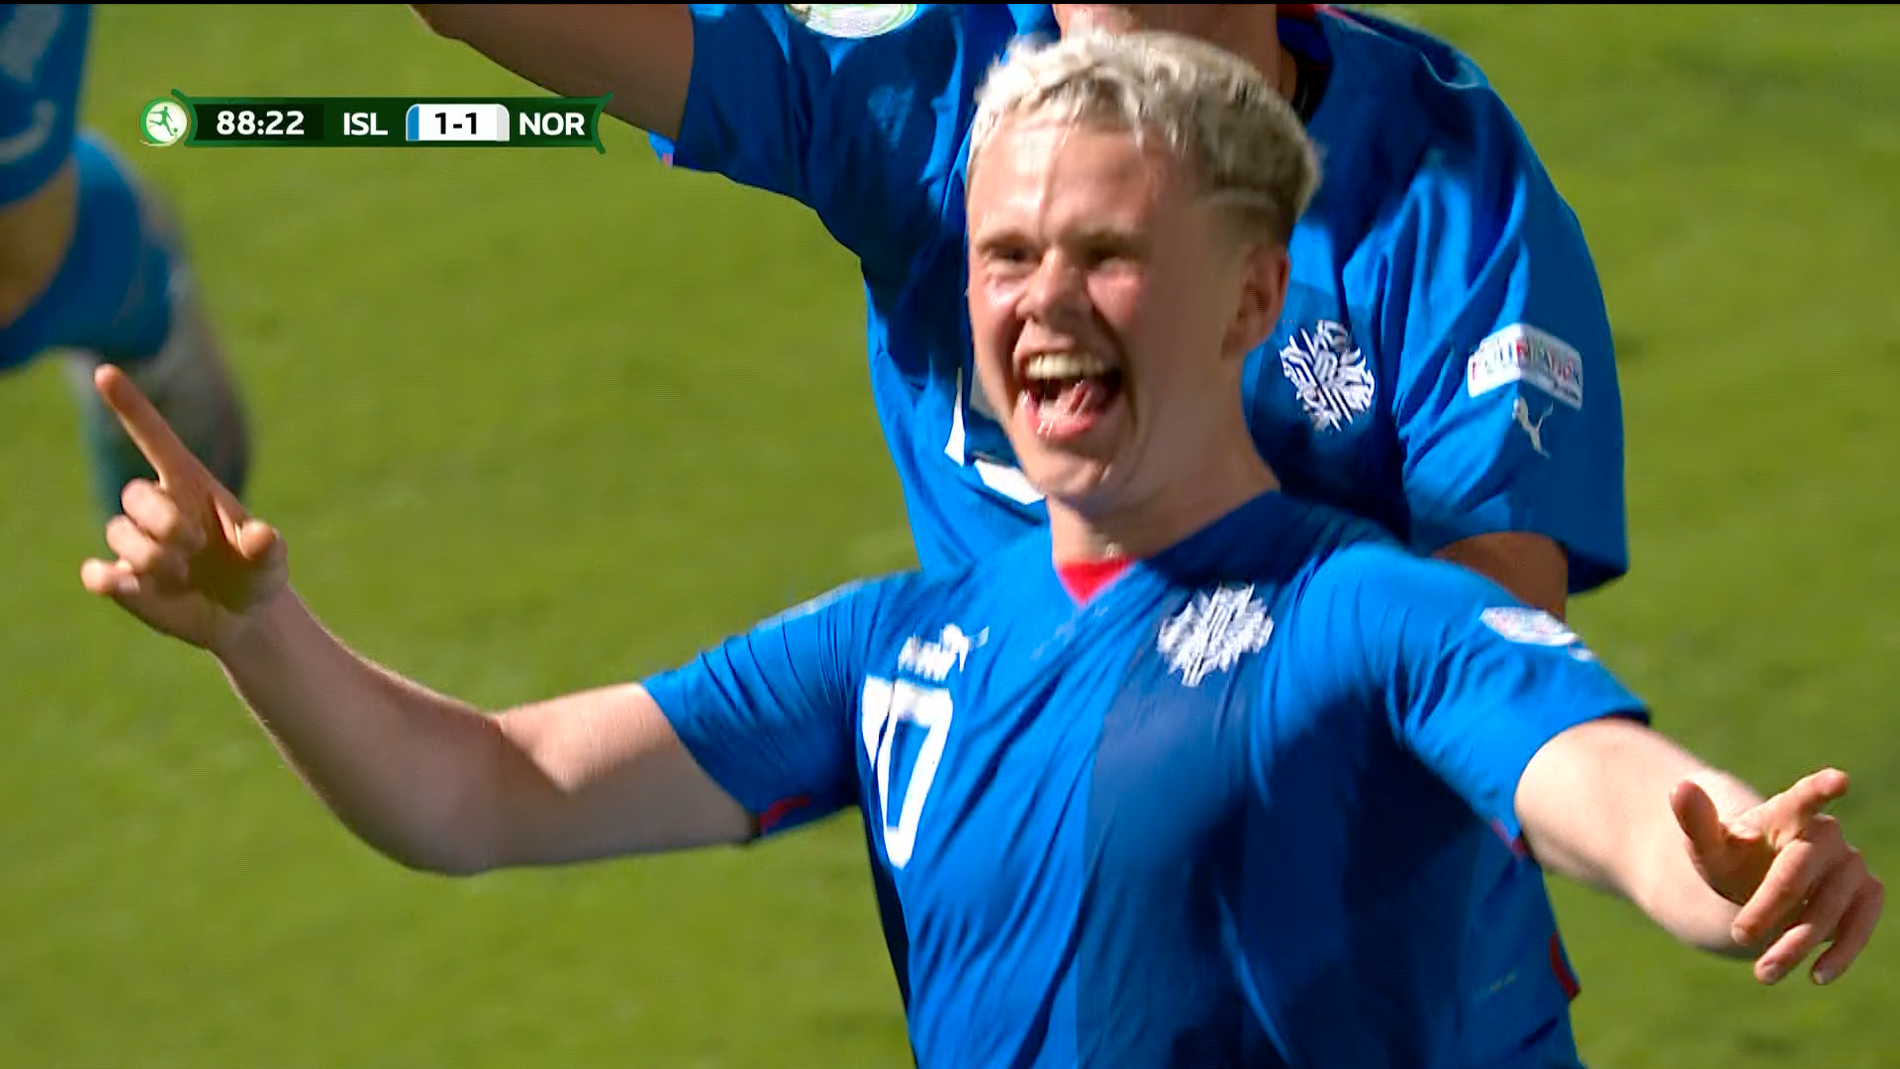 U19 EC: Norway screw up the win against Iceland